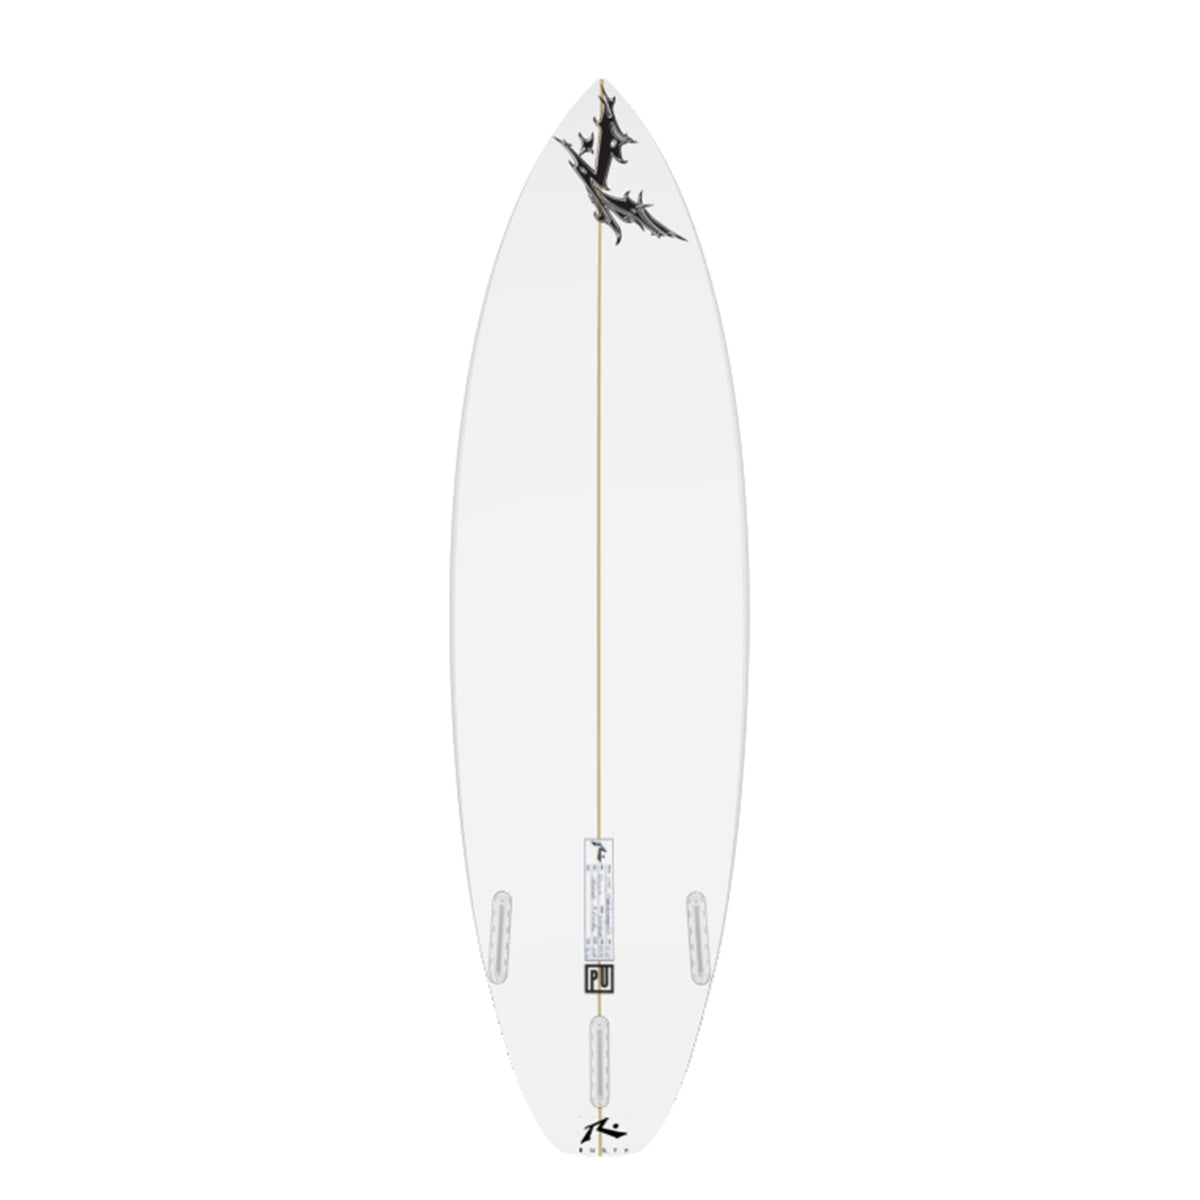 Shiv - High Performance Shortboard - Rusty Surfboards - Bottom View